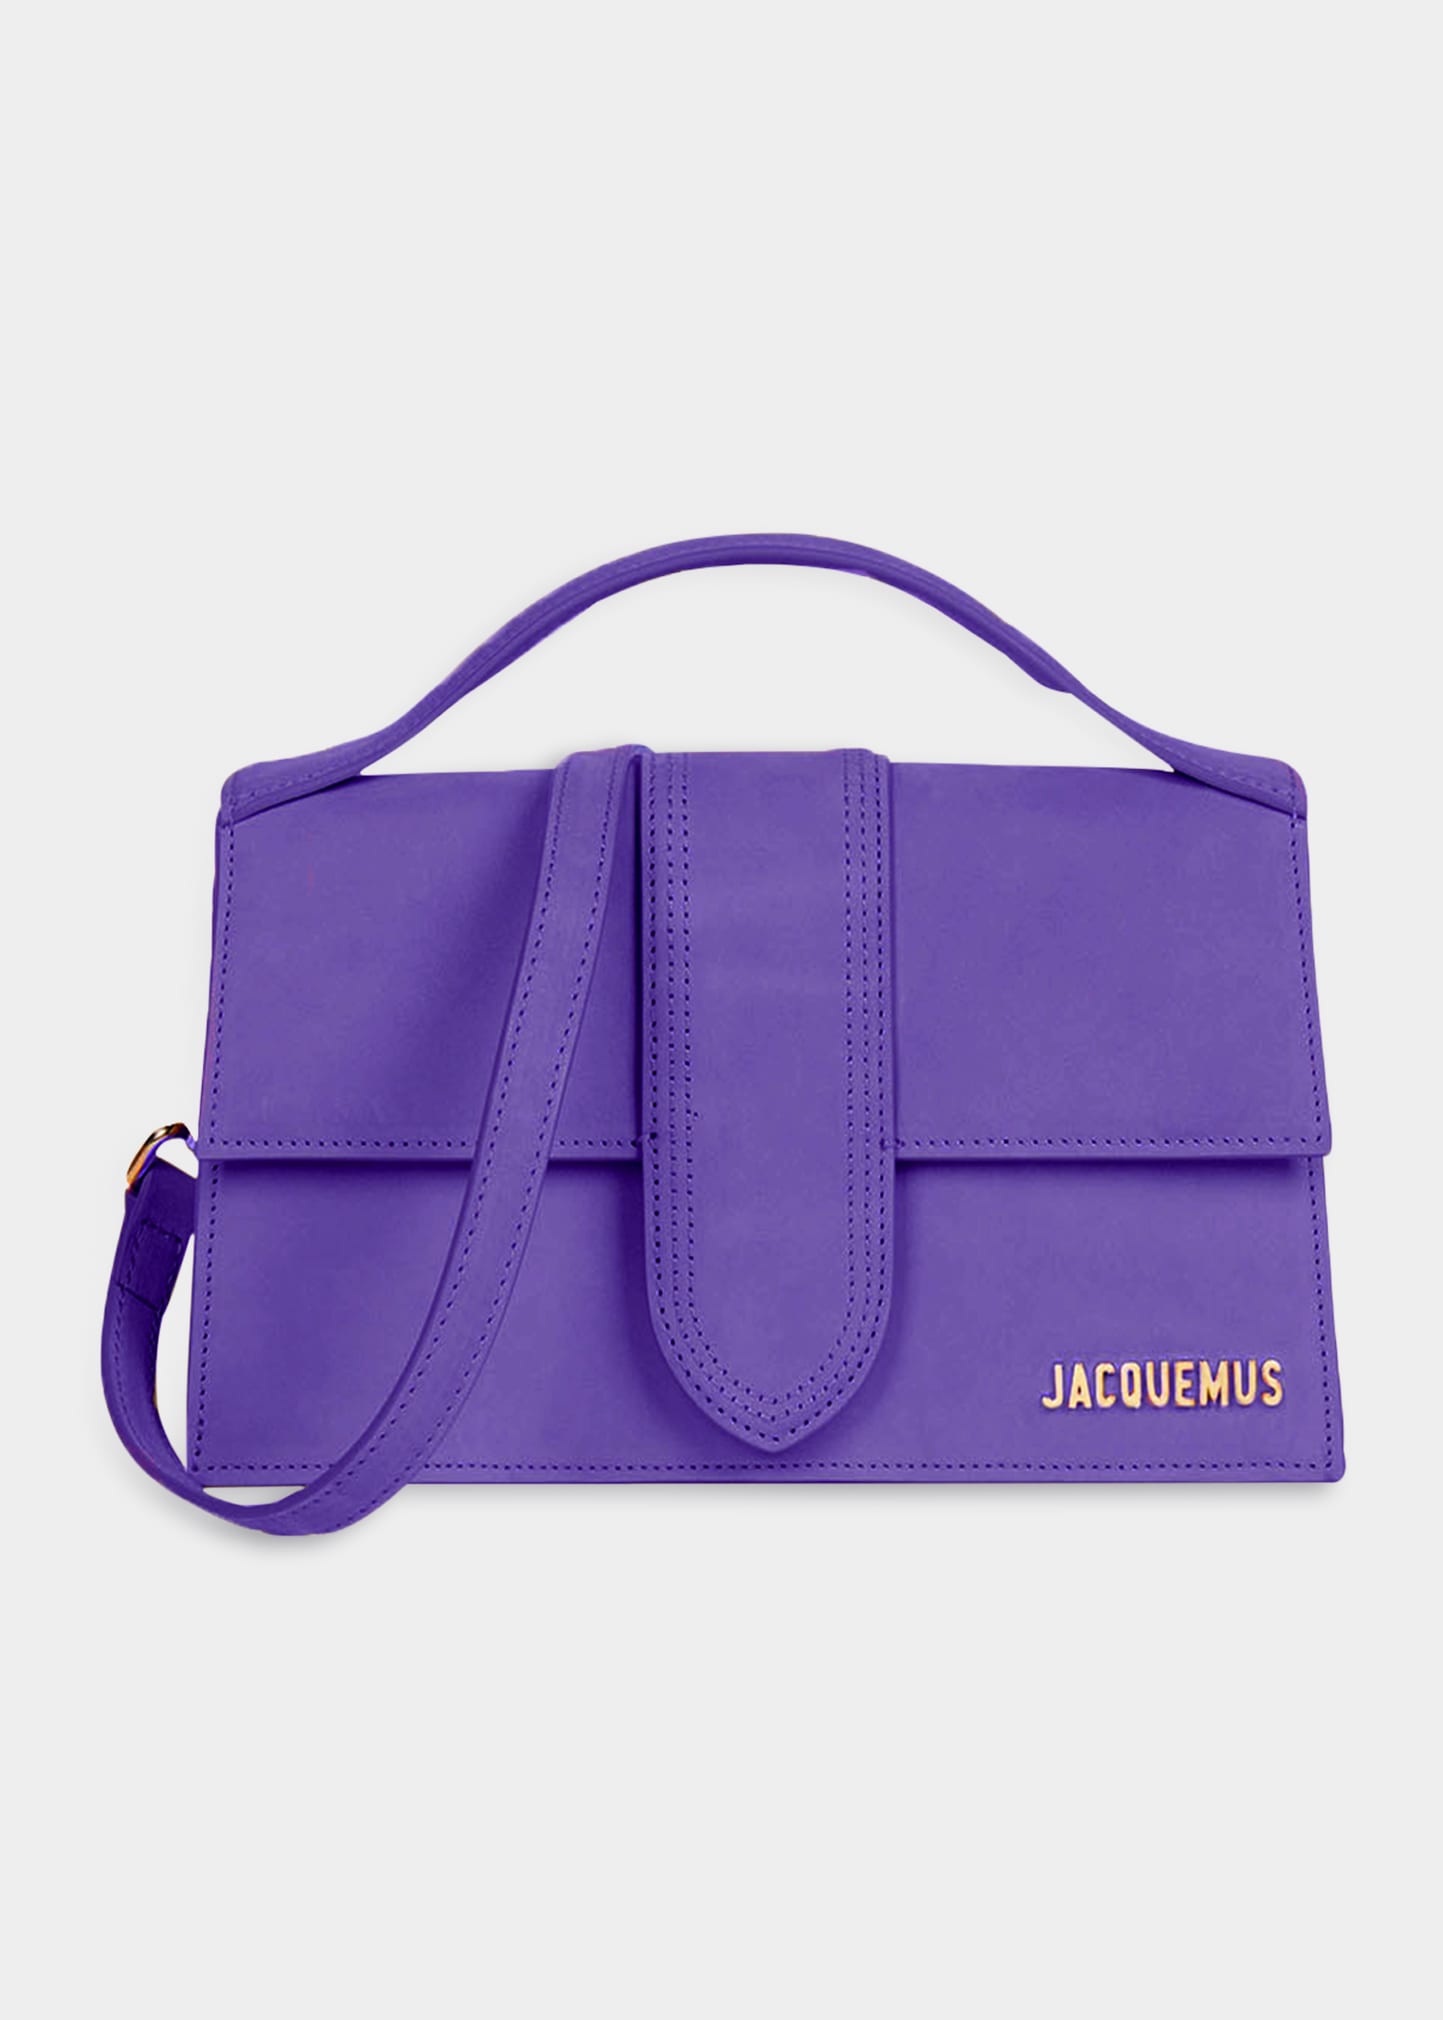 Jacquemus Le Grand Bambino Top-Handle Bag